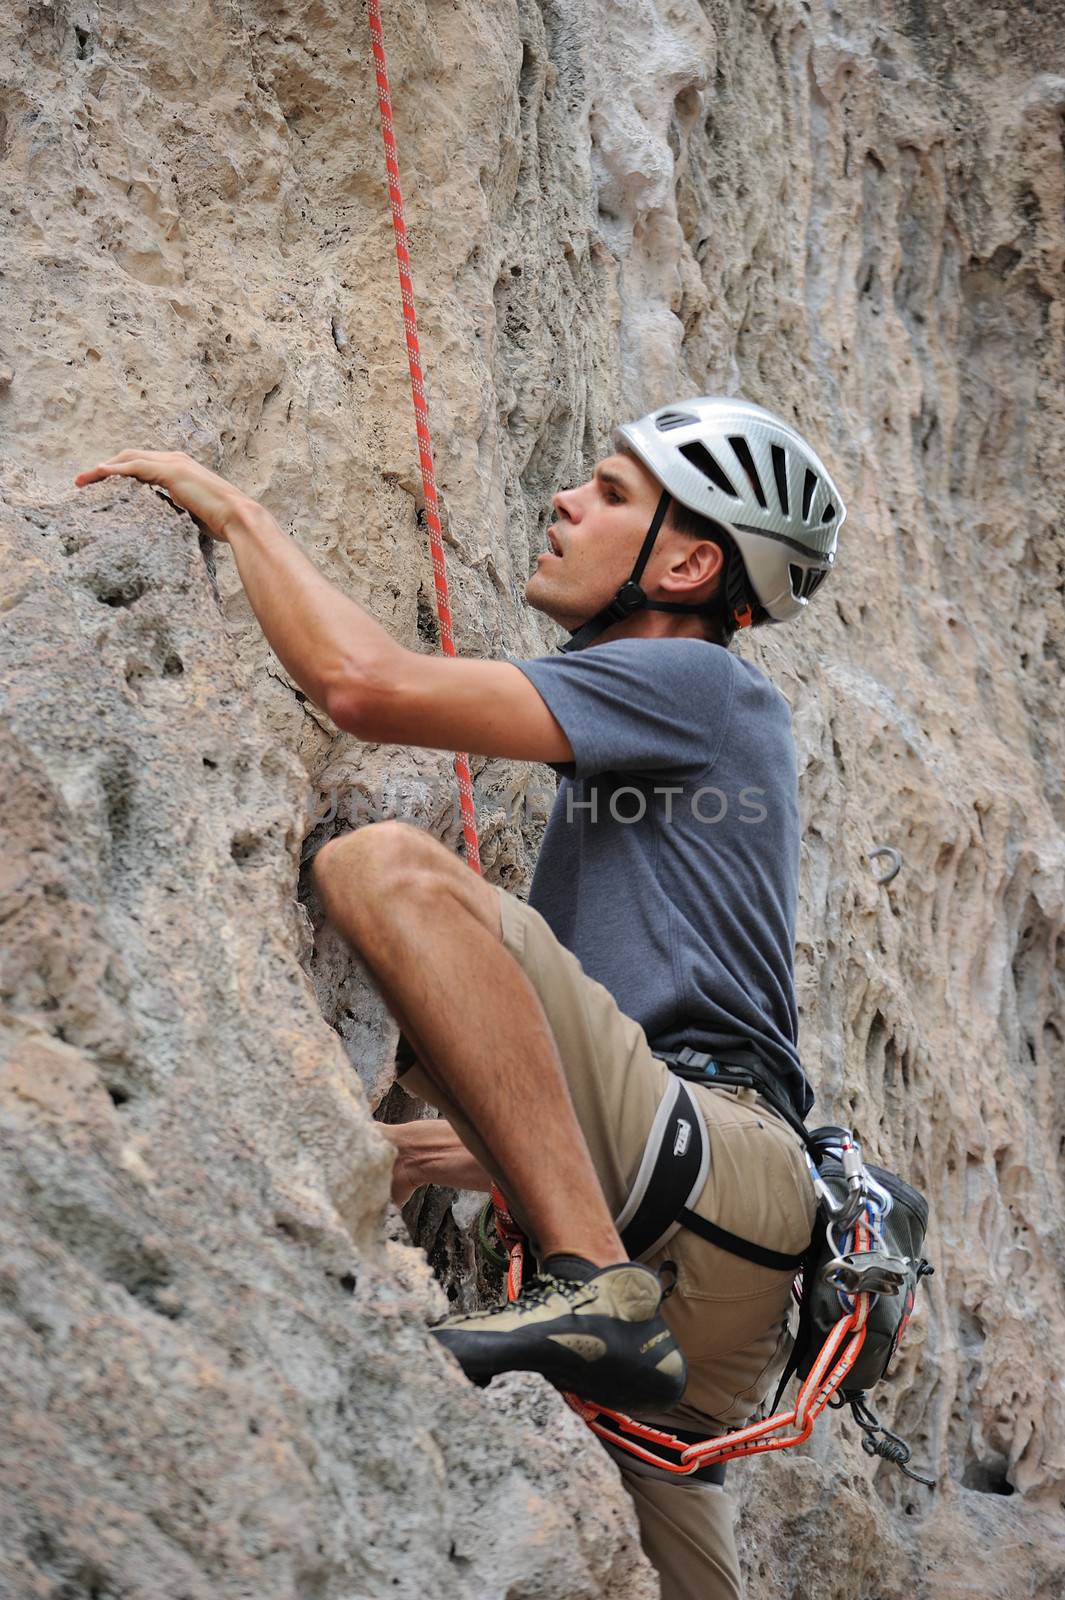 Man climber clinging to a cliff
Photo: Adulsak / yaymicro.com